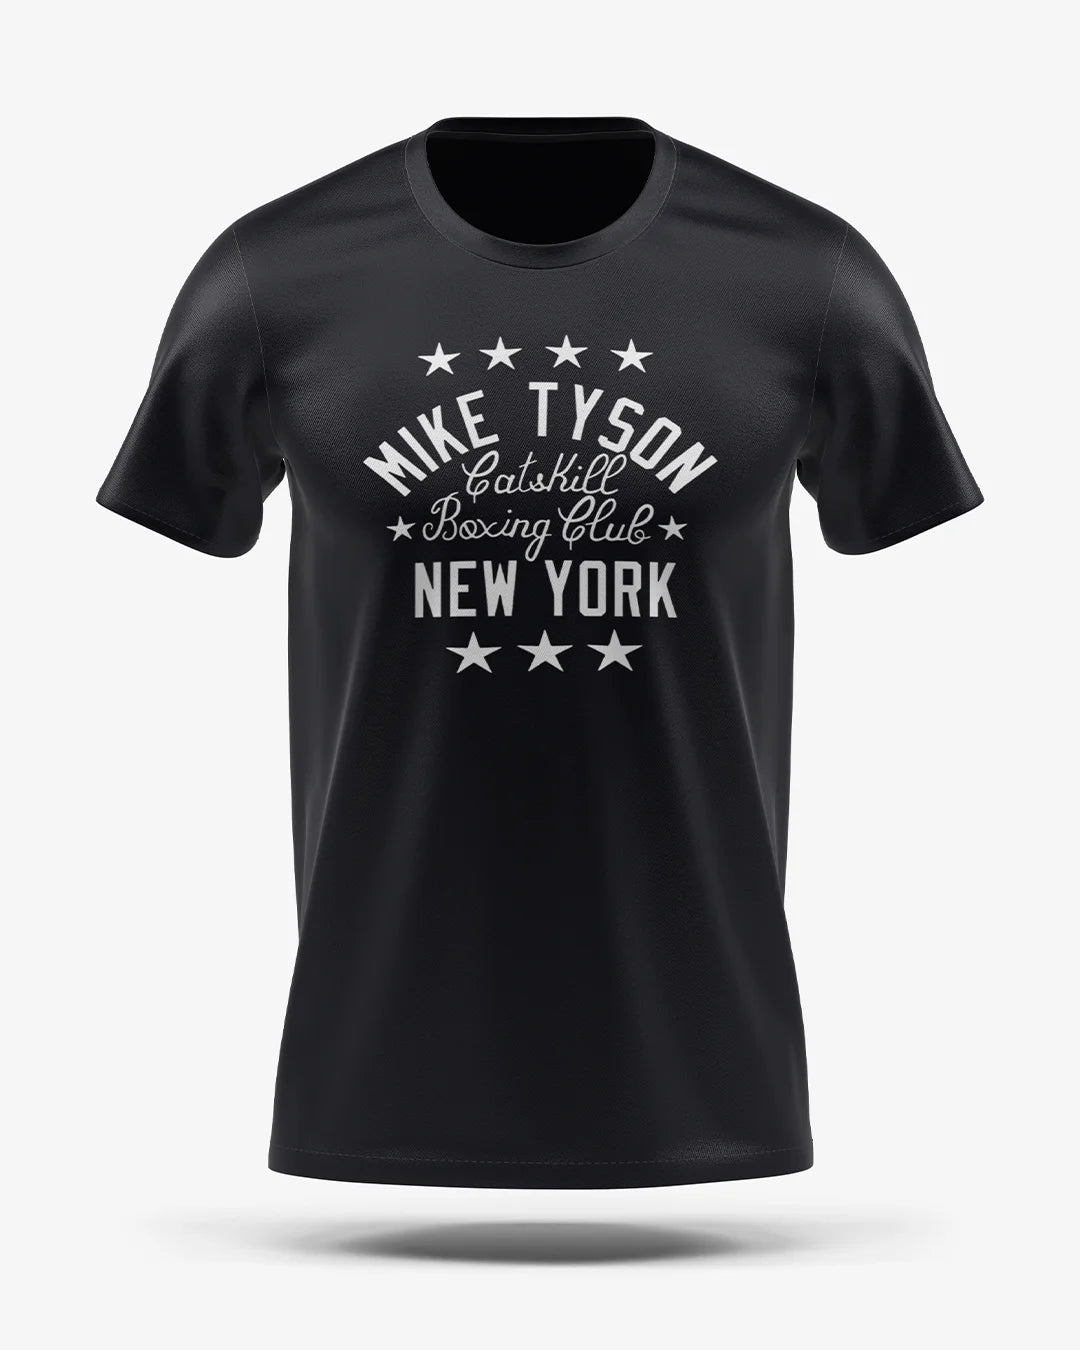 Camiseta Esporte Dry Fit - Tyson New York